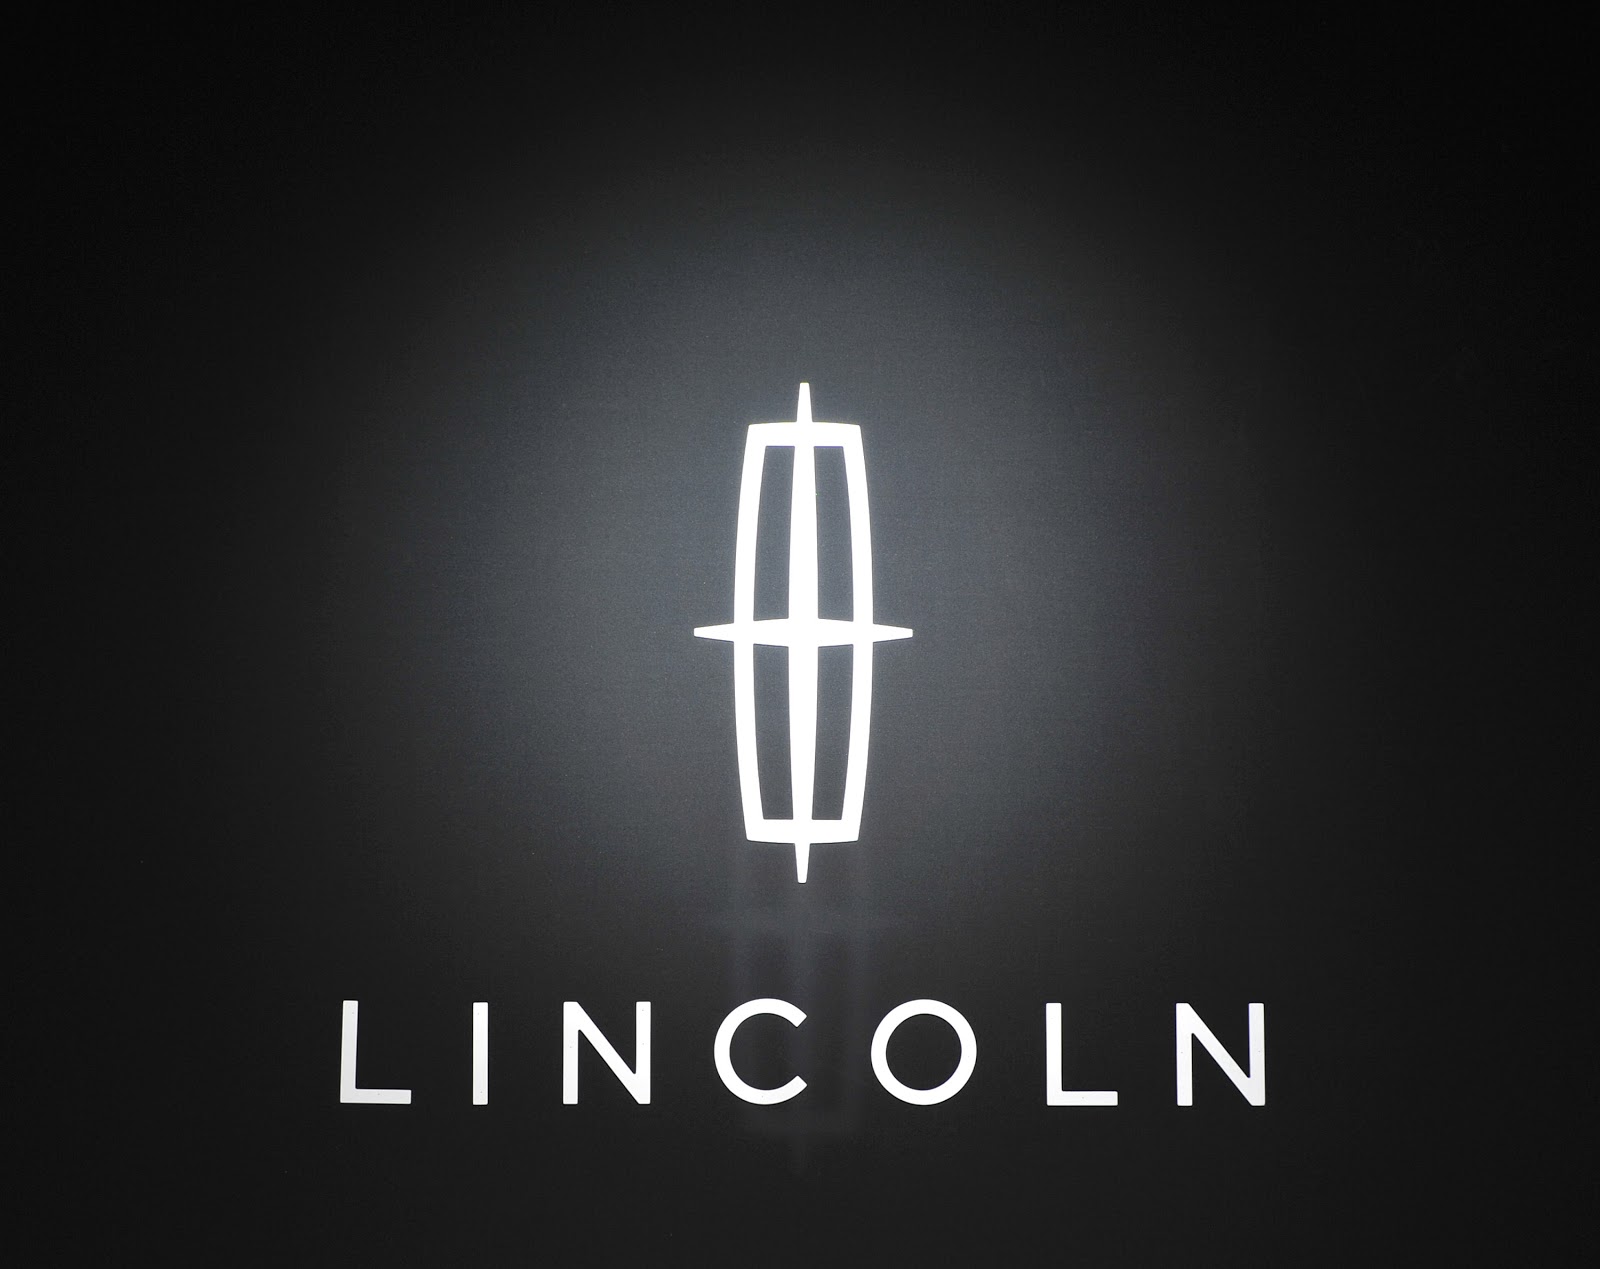 Lincolnlogo